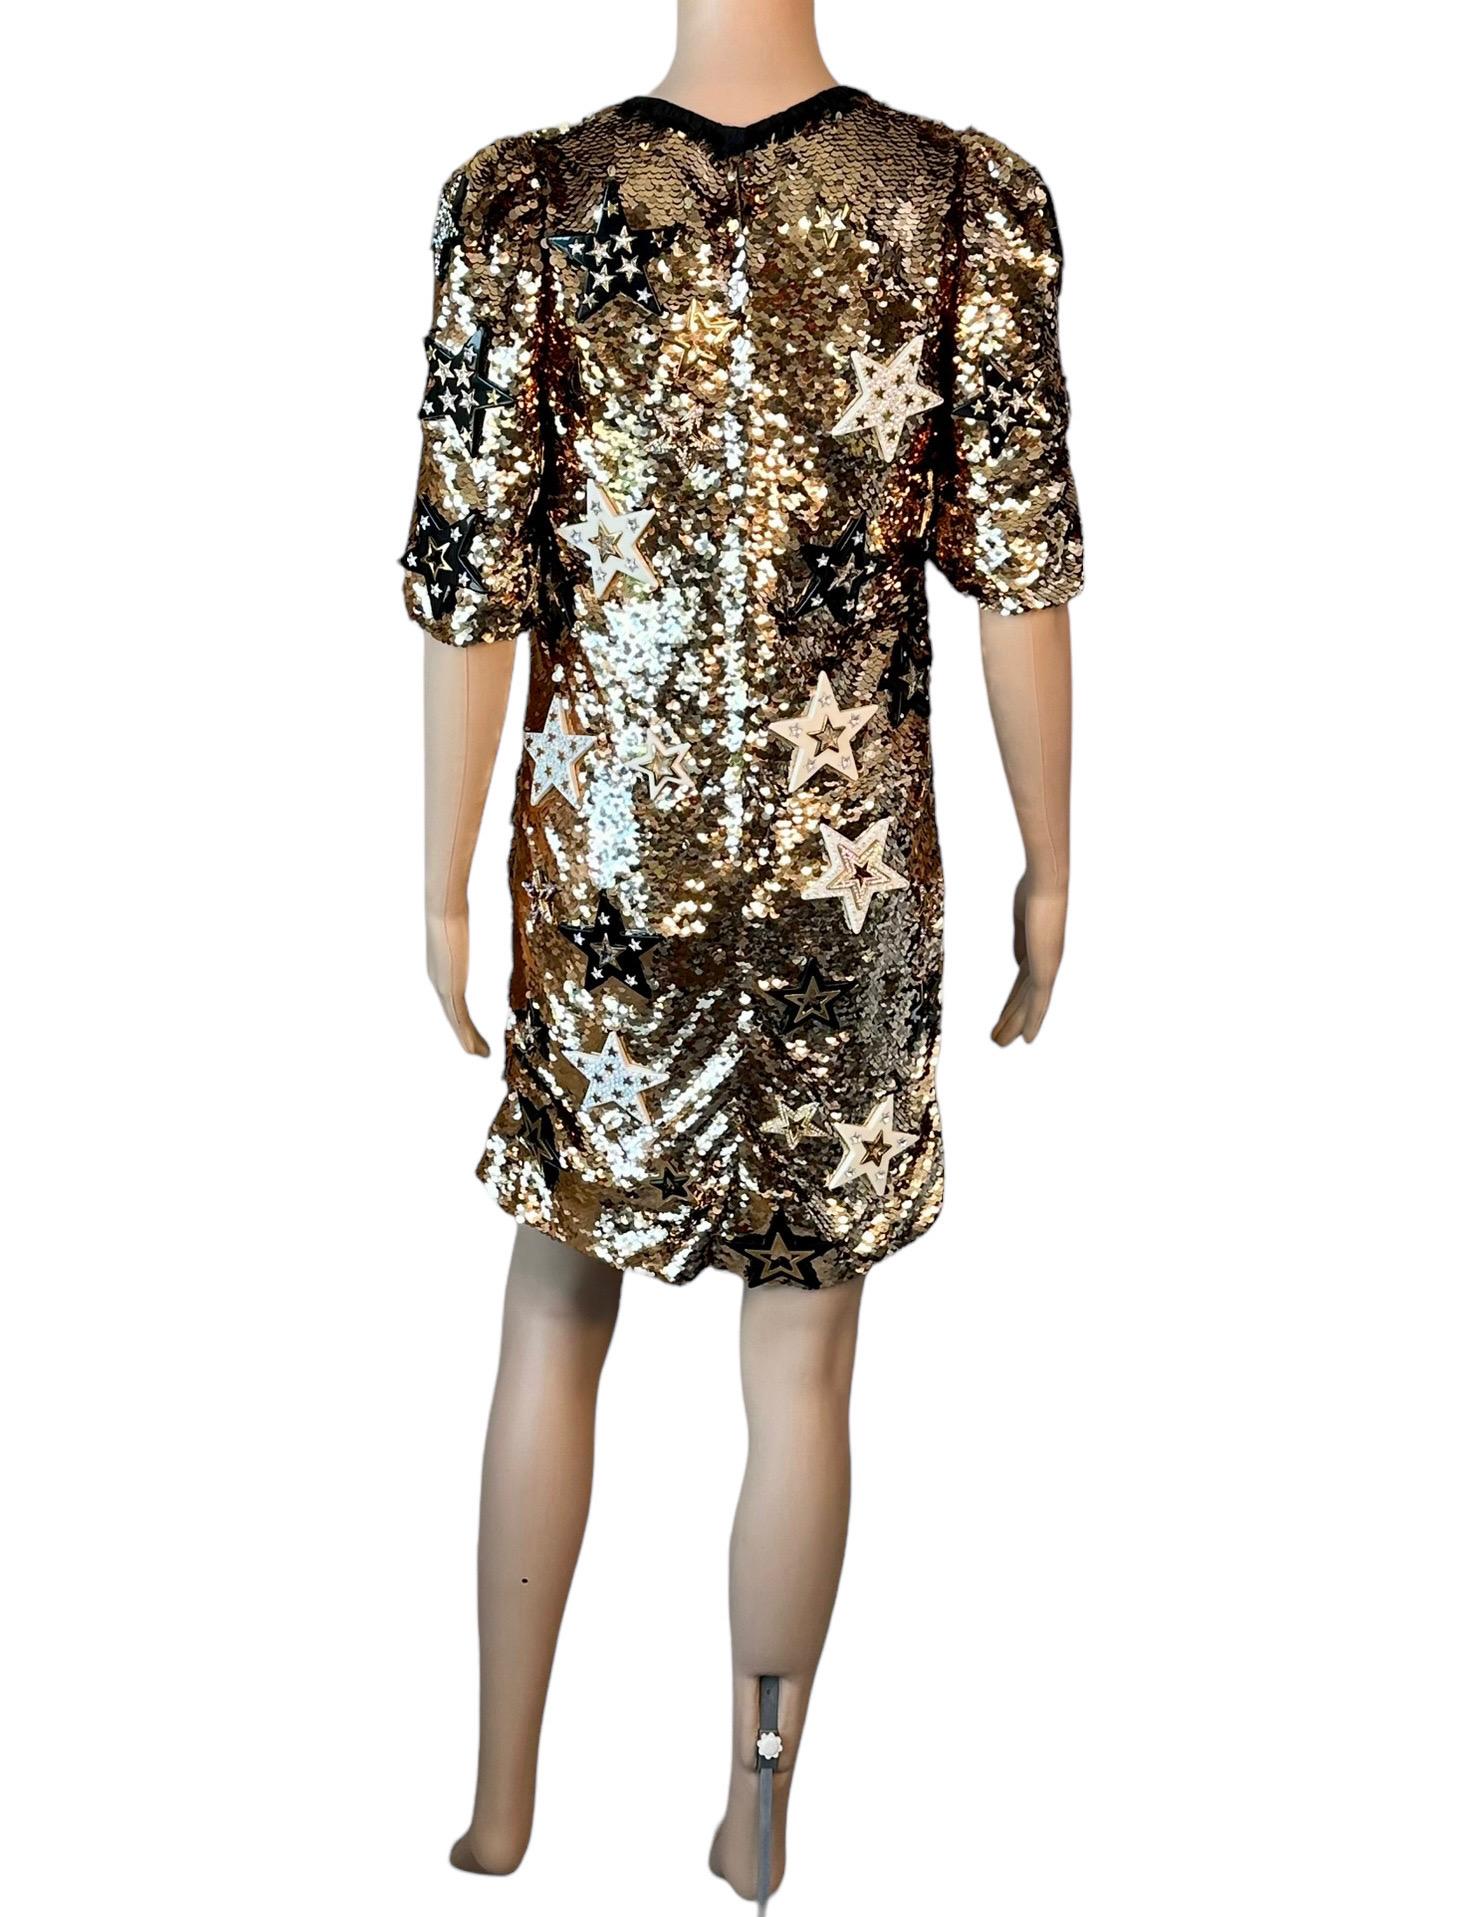 Dolce & Gabbana F/W 2011 Runway Unworn Embellished Star Sequined Gold Mini Dress For Sale 7